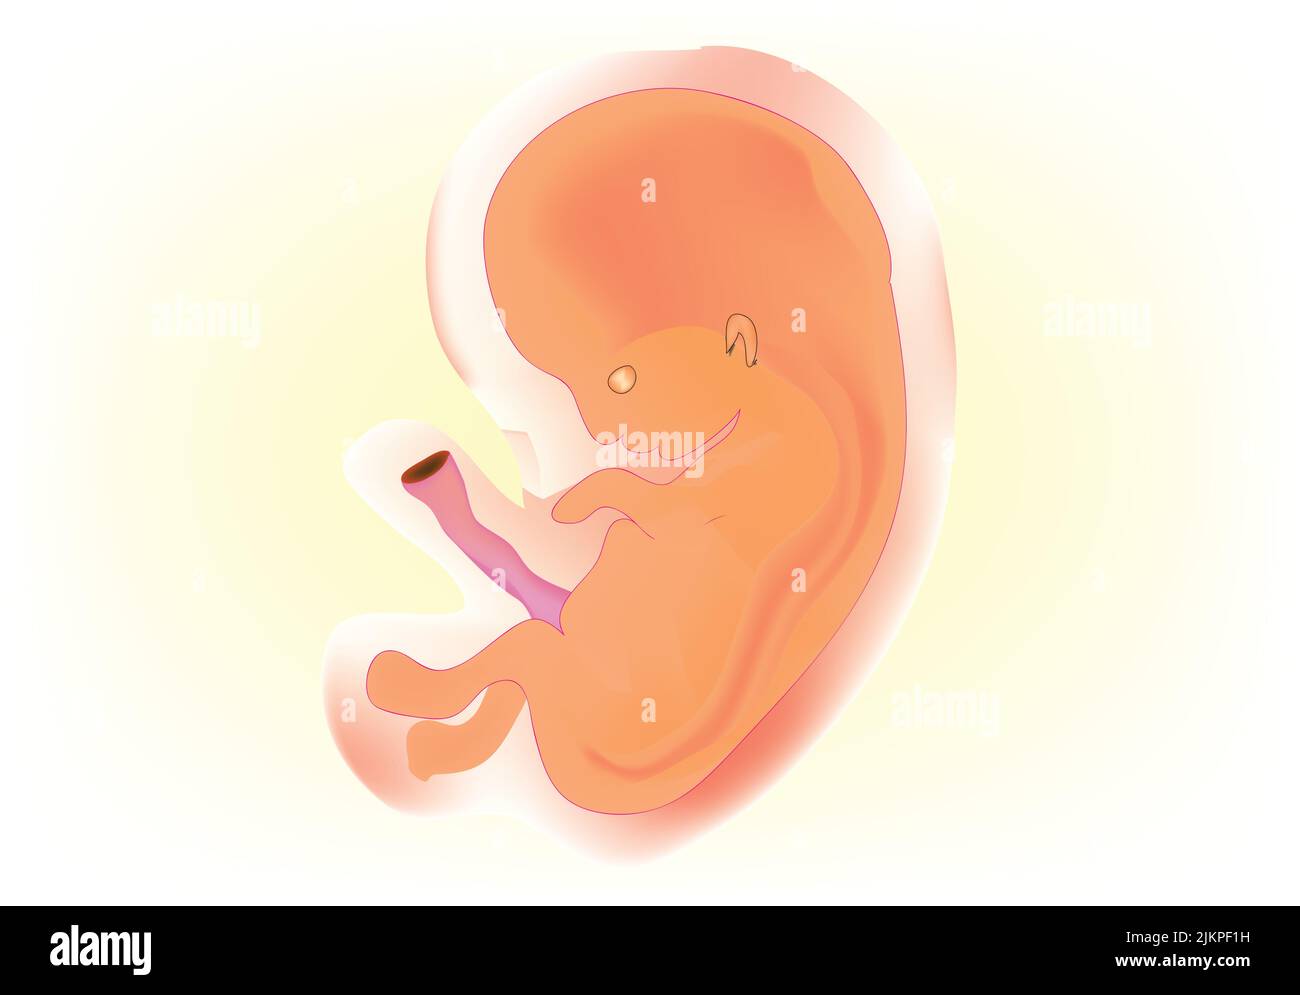 Human embryo anatomy Stock Photo